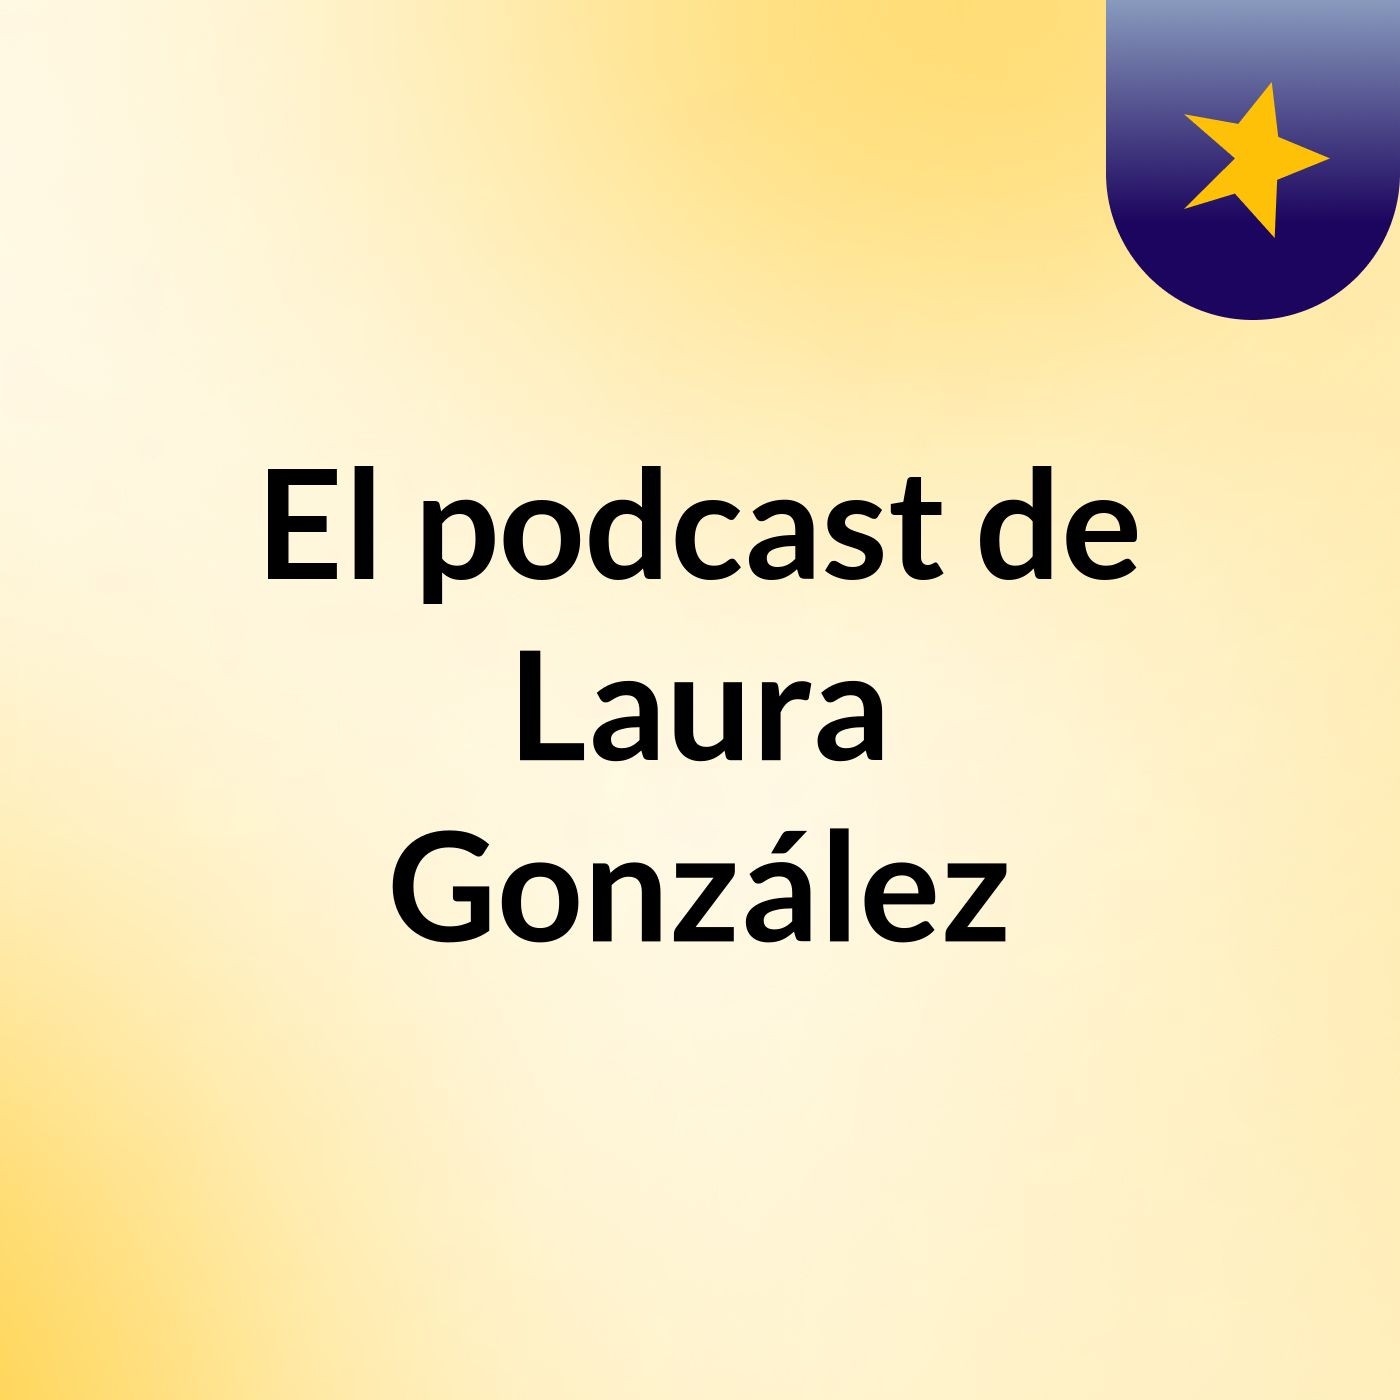 El podcast de Laura González